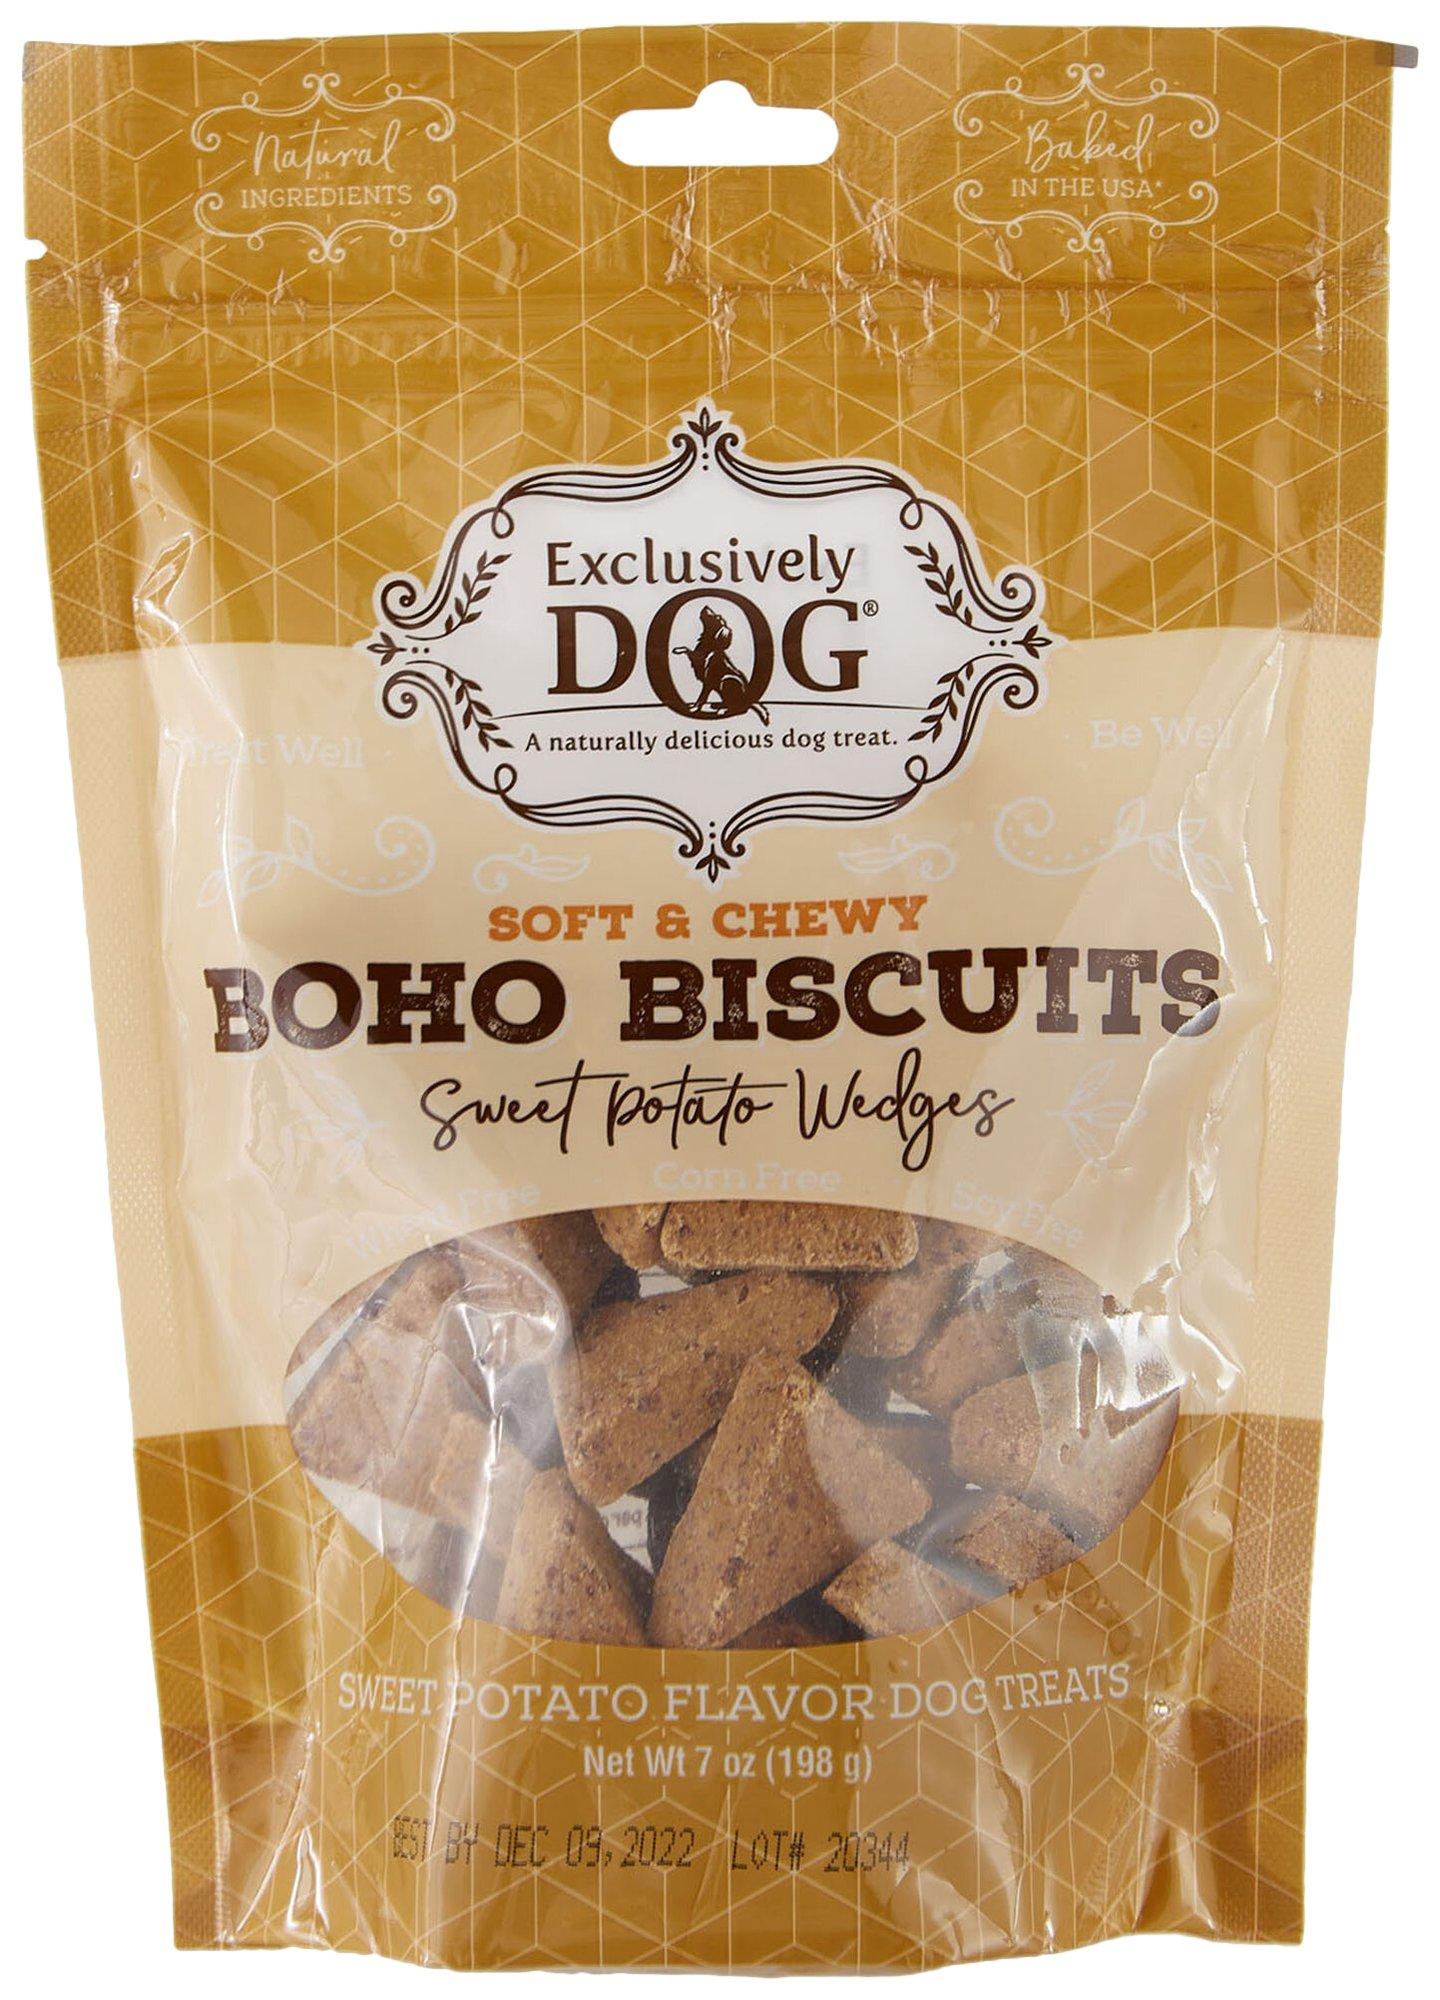 Boho Biscuits Sweet Potato Wedges Dog Treats